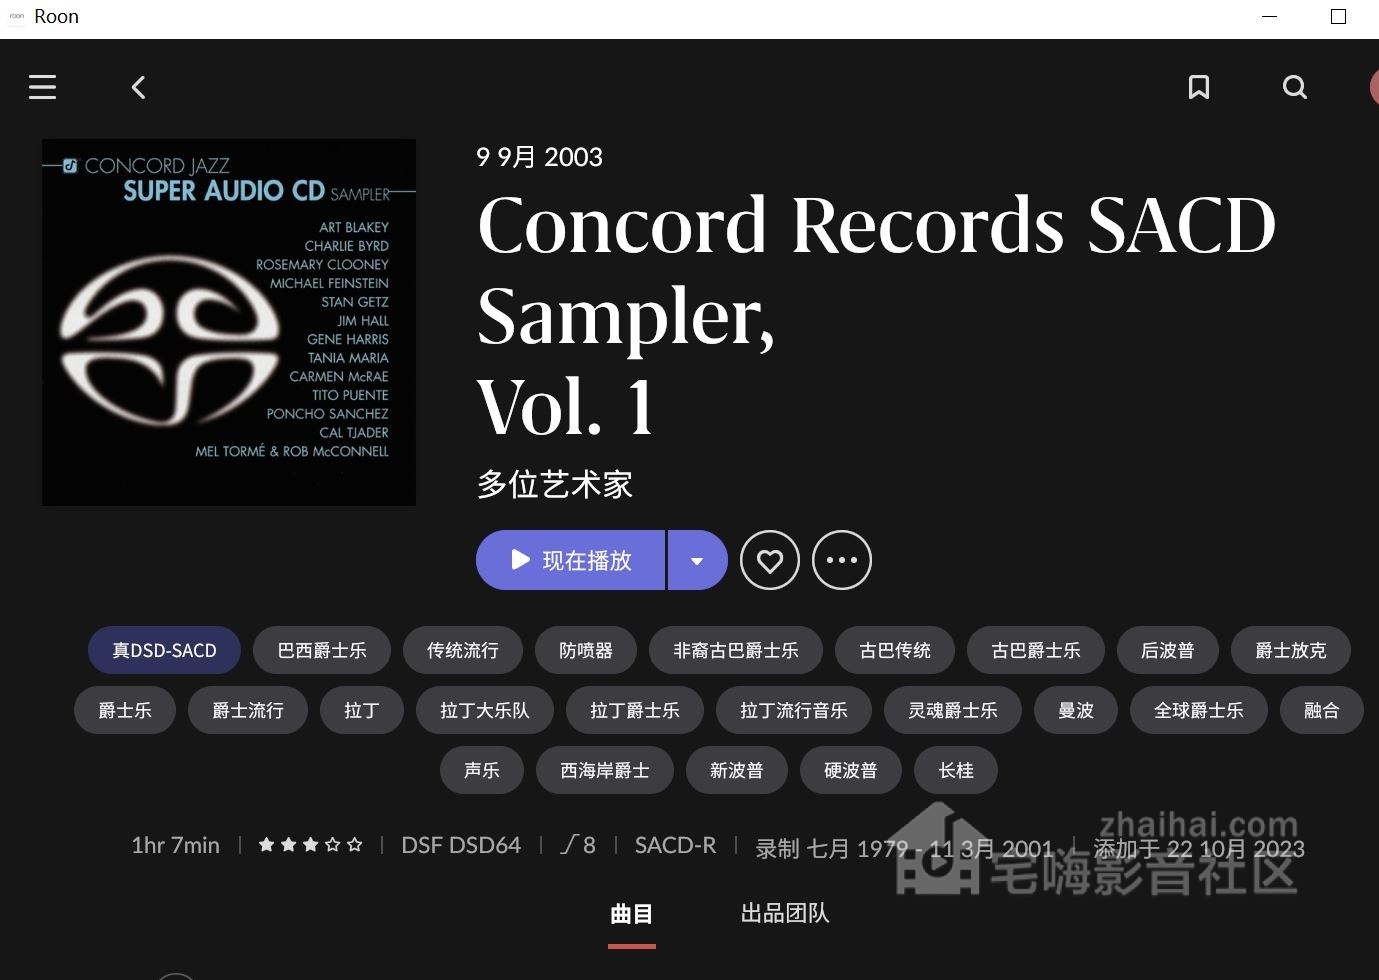 Concord-Jazz Super Audio CD Sampler-1-ISO-2 6.JPG